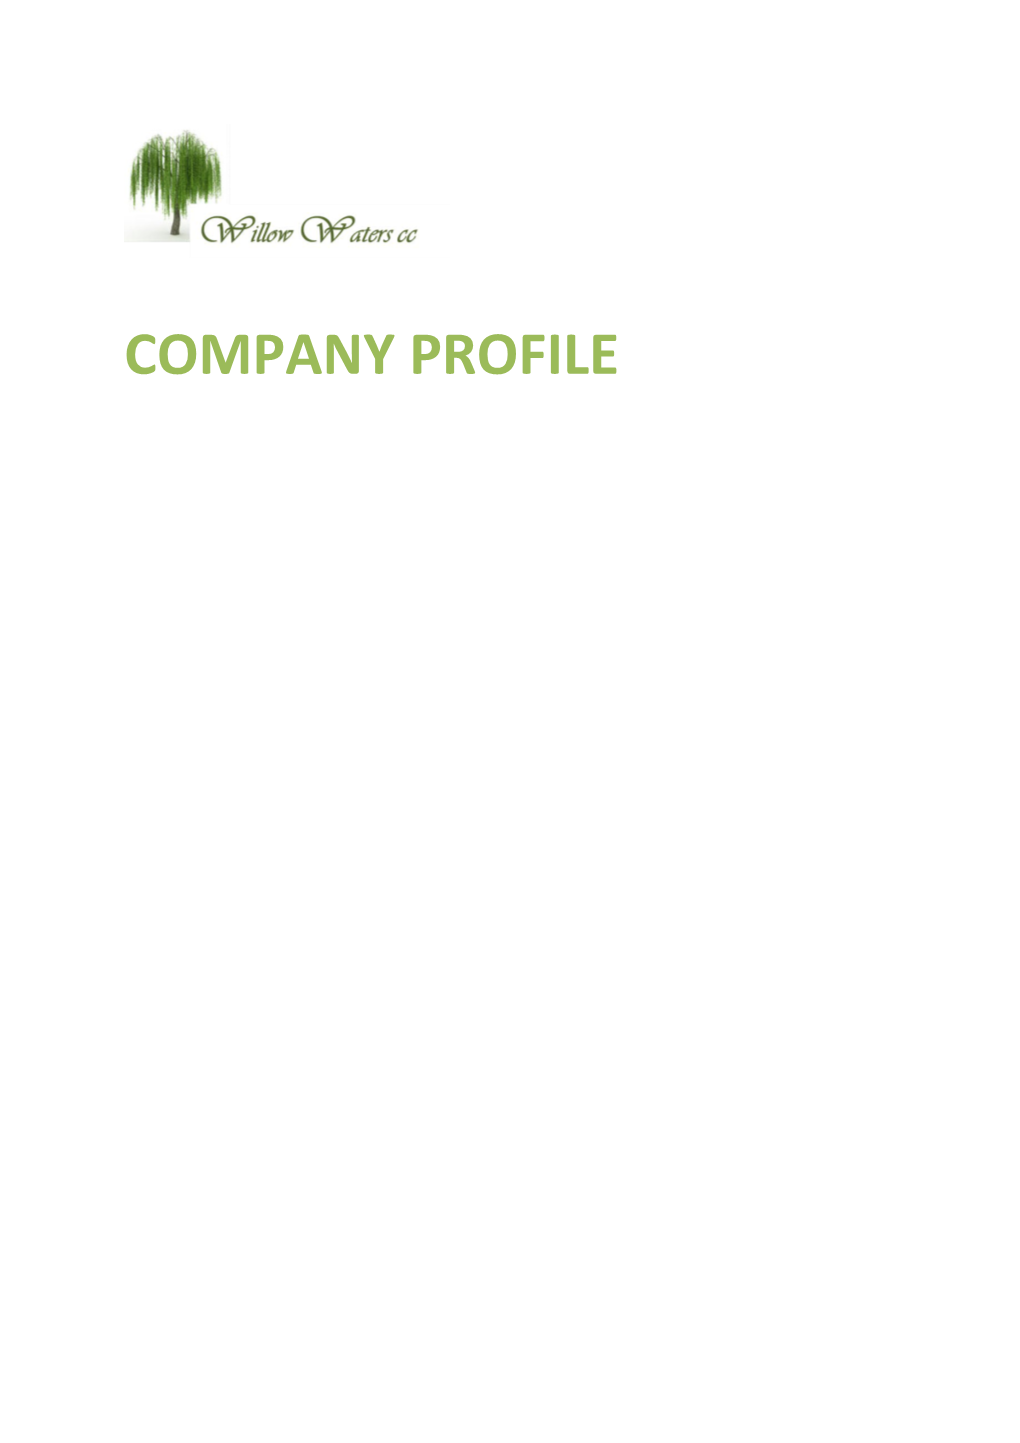 Company Details